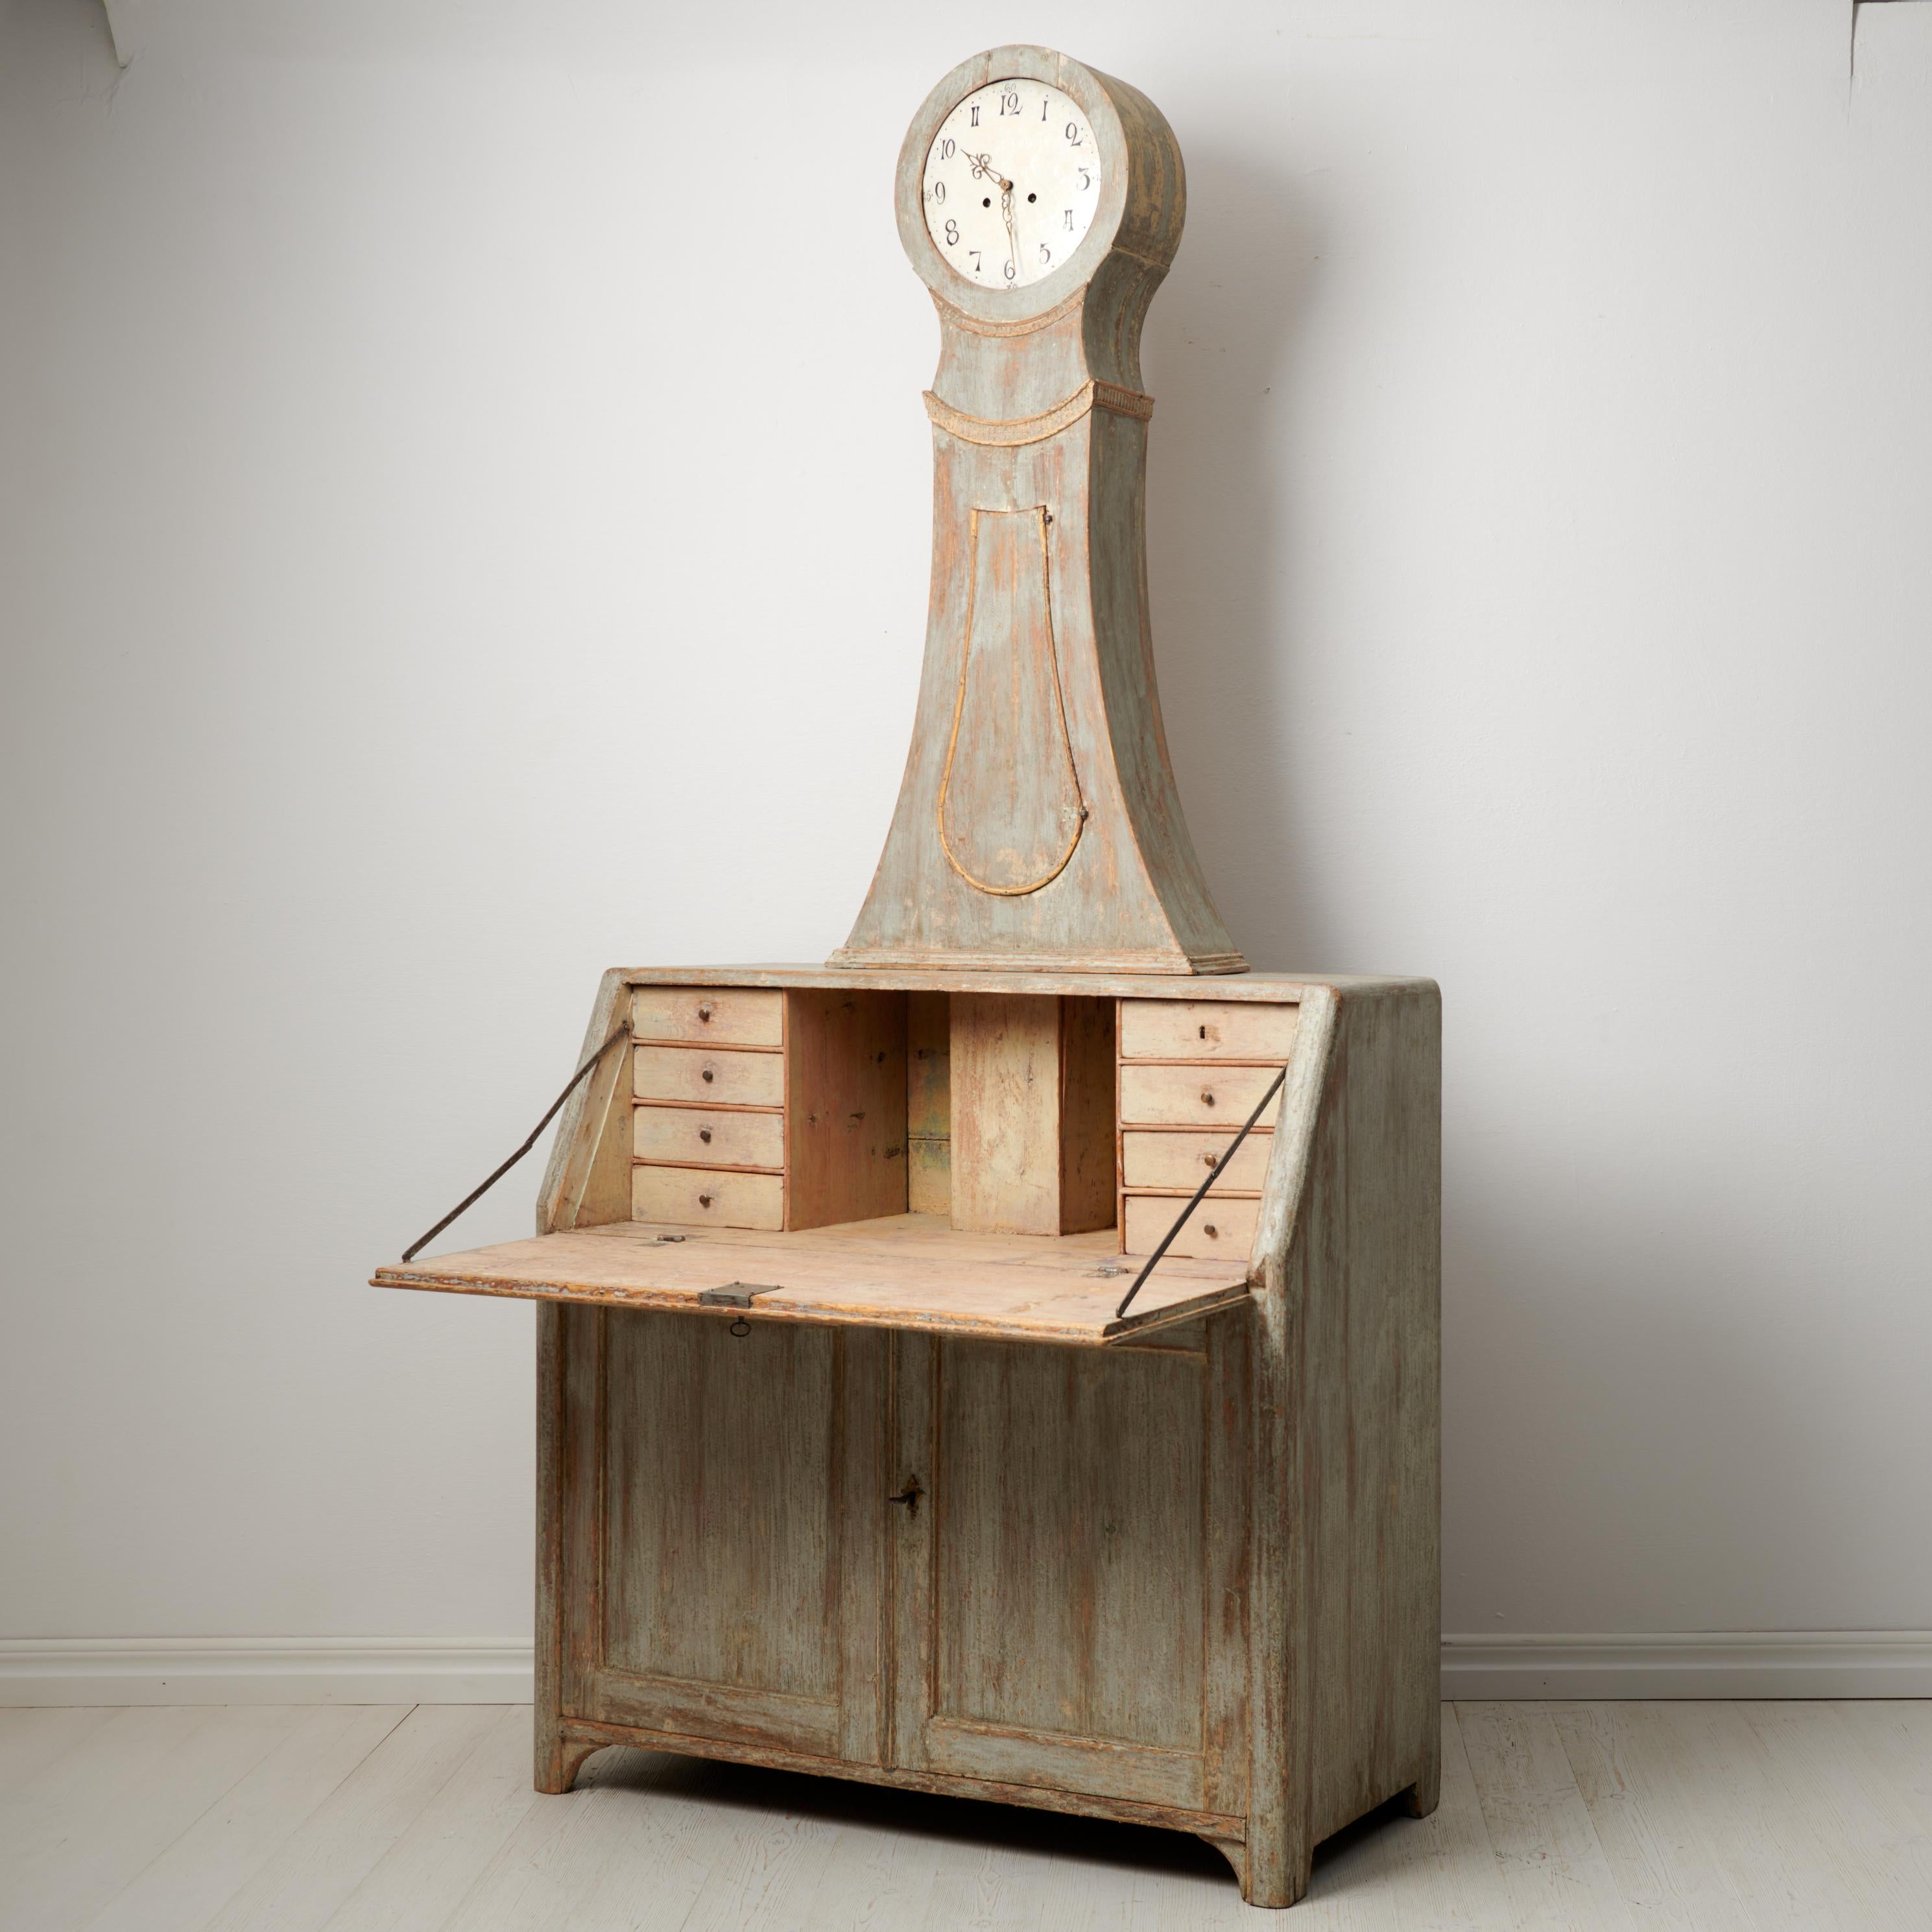 Rare Northern Swedish Antique Pine Secretary Clock Desk In Good Condition For Sale In Kramfors, SE